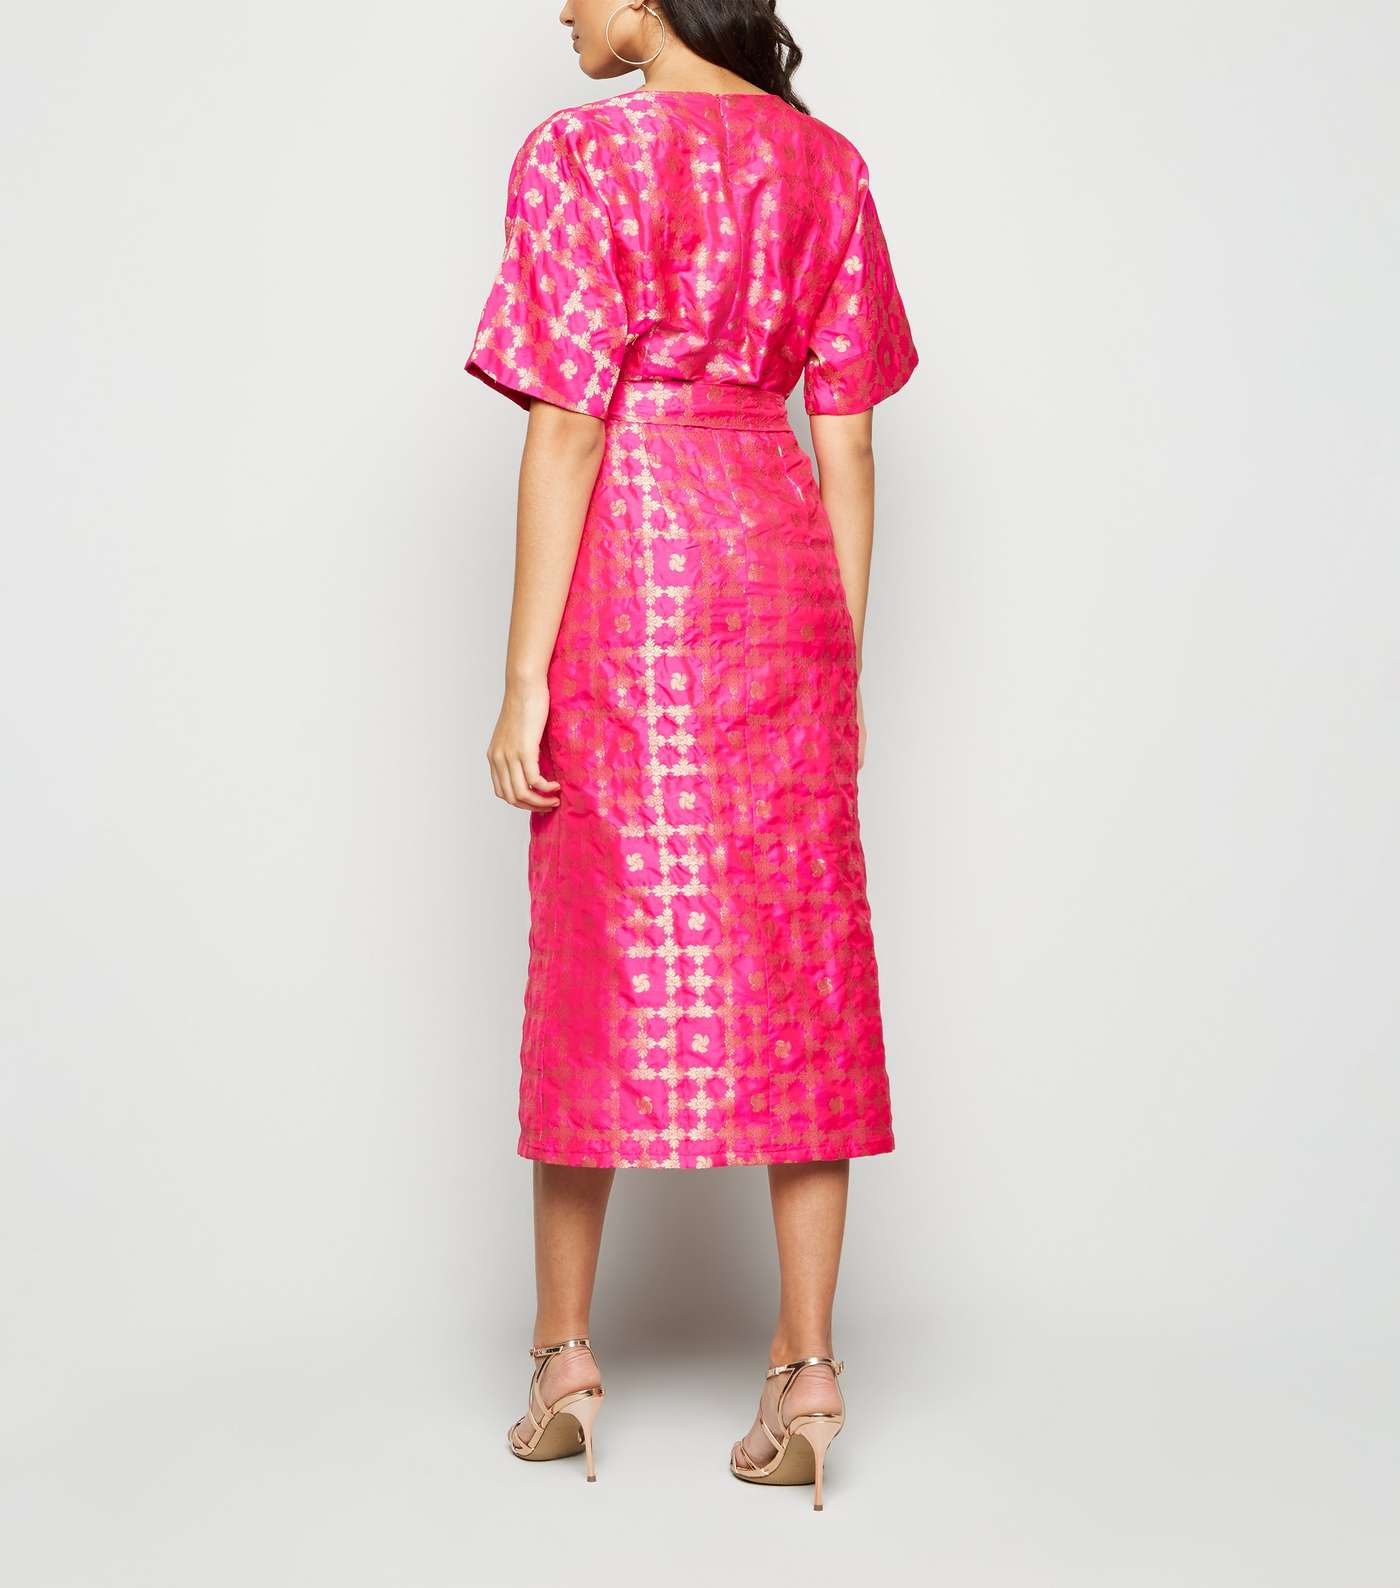 Nesavaali Bright Pink Metallic Jacquard Midi Dress Image 3